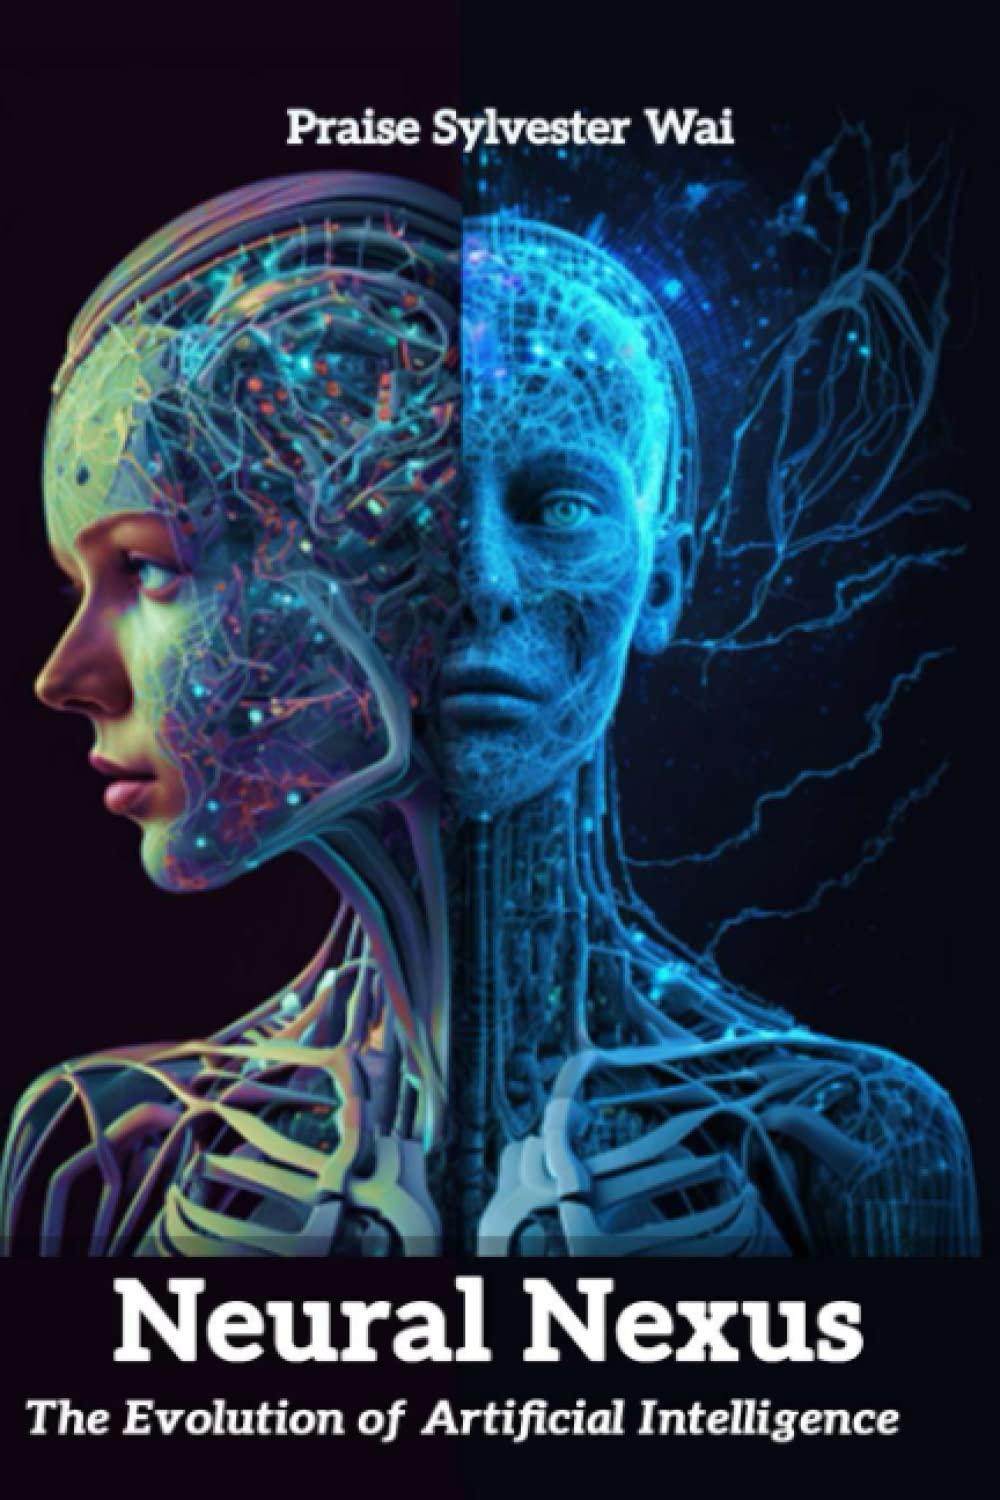 neural nexus  the evolution of artificial intelligence 1st edition praise sylvester wai b0bygy7xhn,